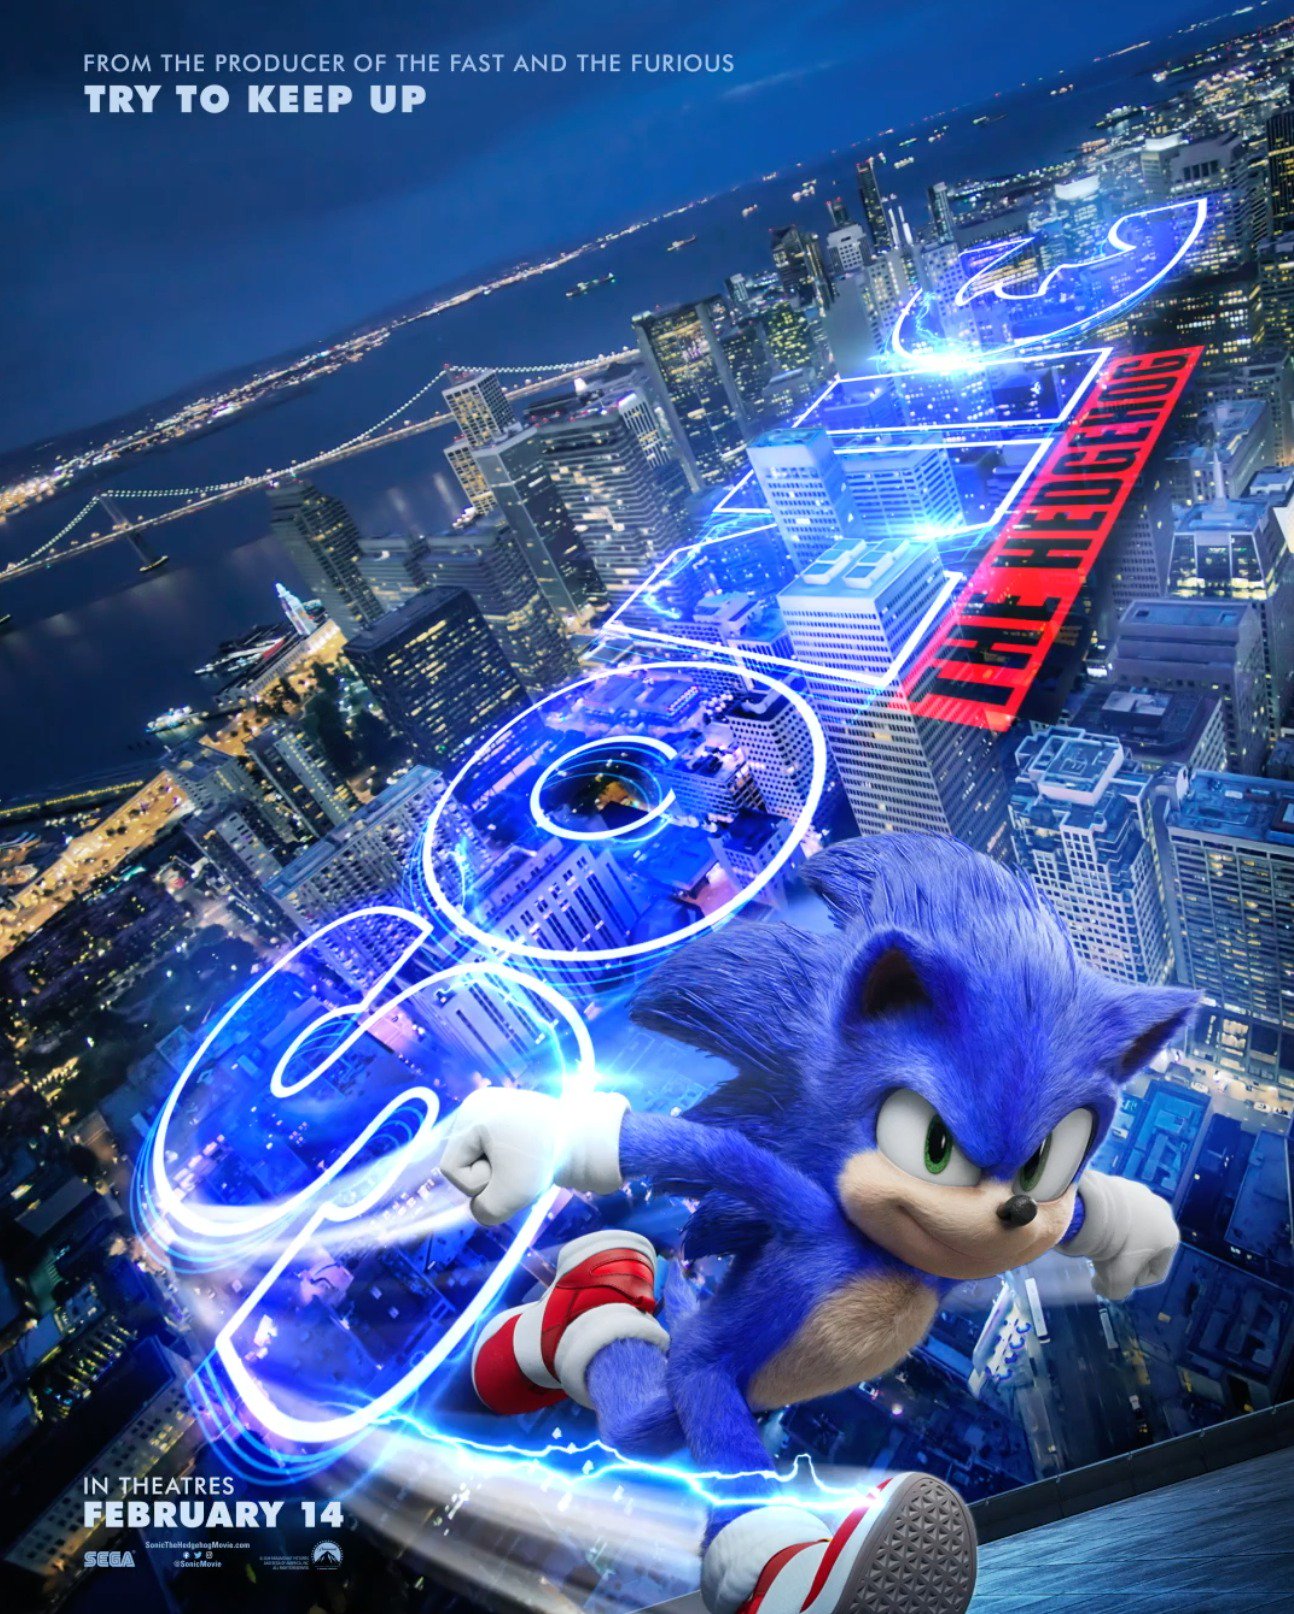 Sonic movienews on X: Sonic Movie 4 fan made poster created by  Sonicmovienews 👀🔥🤩💙🤍🖤❤️ #SonicMovie #sonic #SonicTheHedegehog  #ShadowTheHedgehog #silverthehedgehog #knuckles #amyrose #sonicmovie4  #sonicmovie3 #RougeTheBat #BlazeTheCat